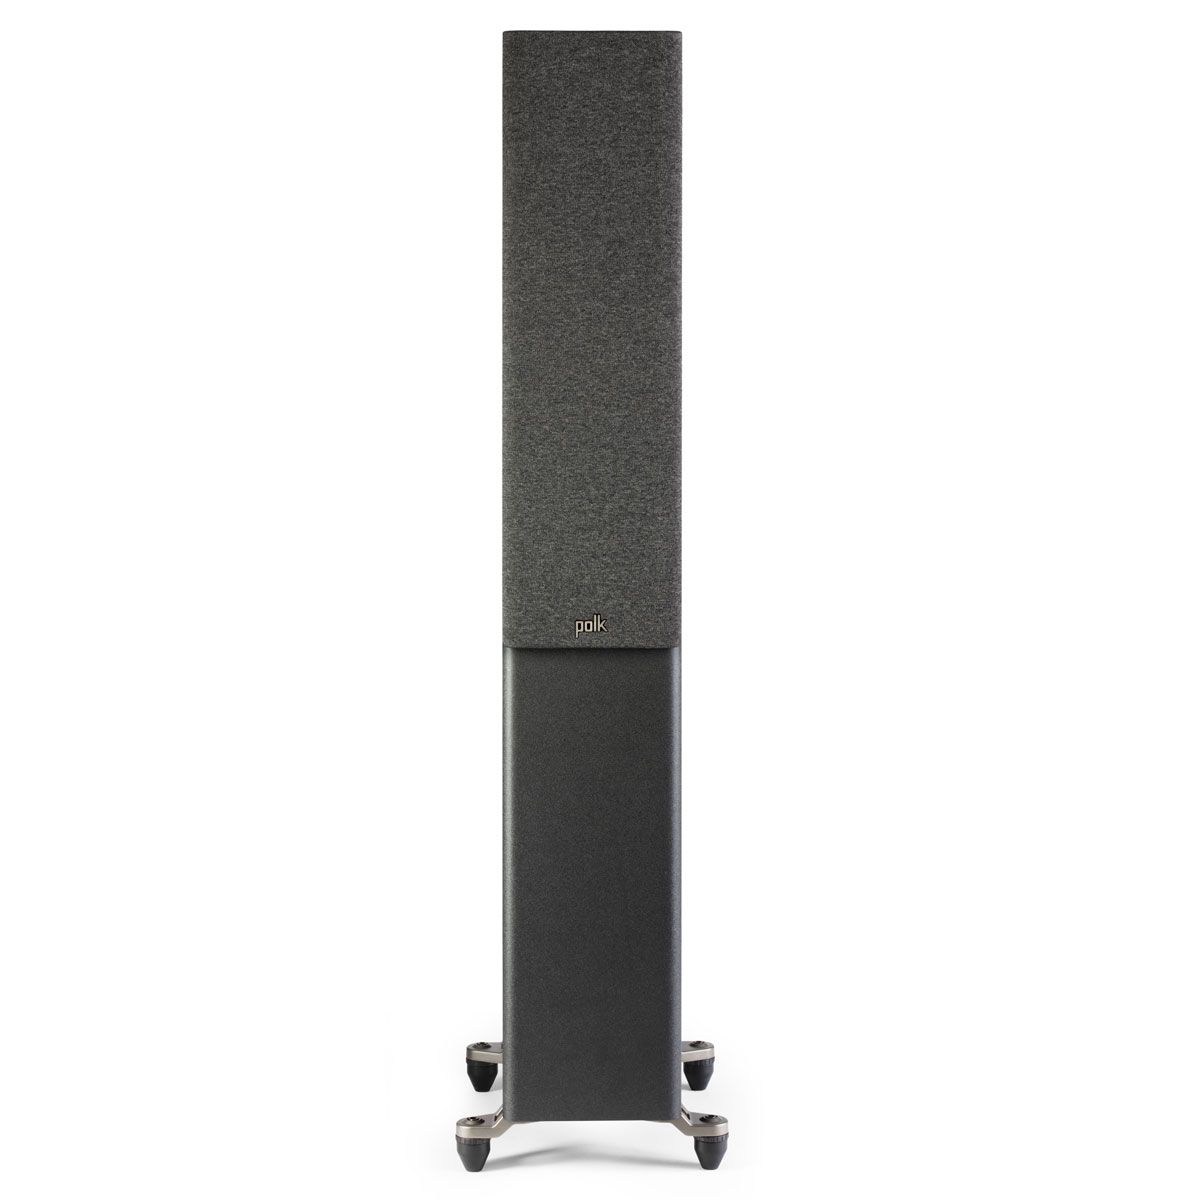 Polk Audio Reference R500 Floorstanding Speaker, Black, front with grille